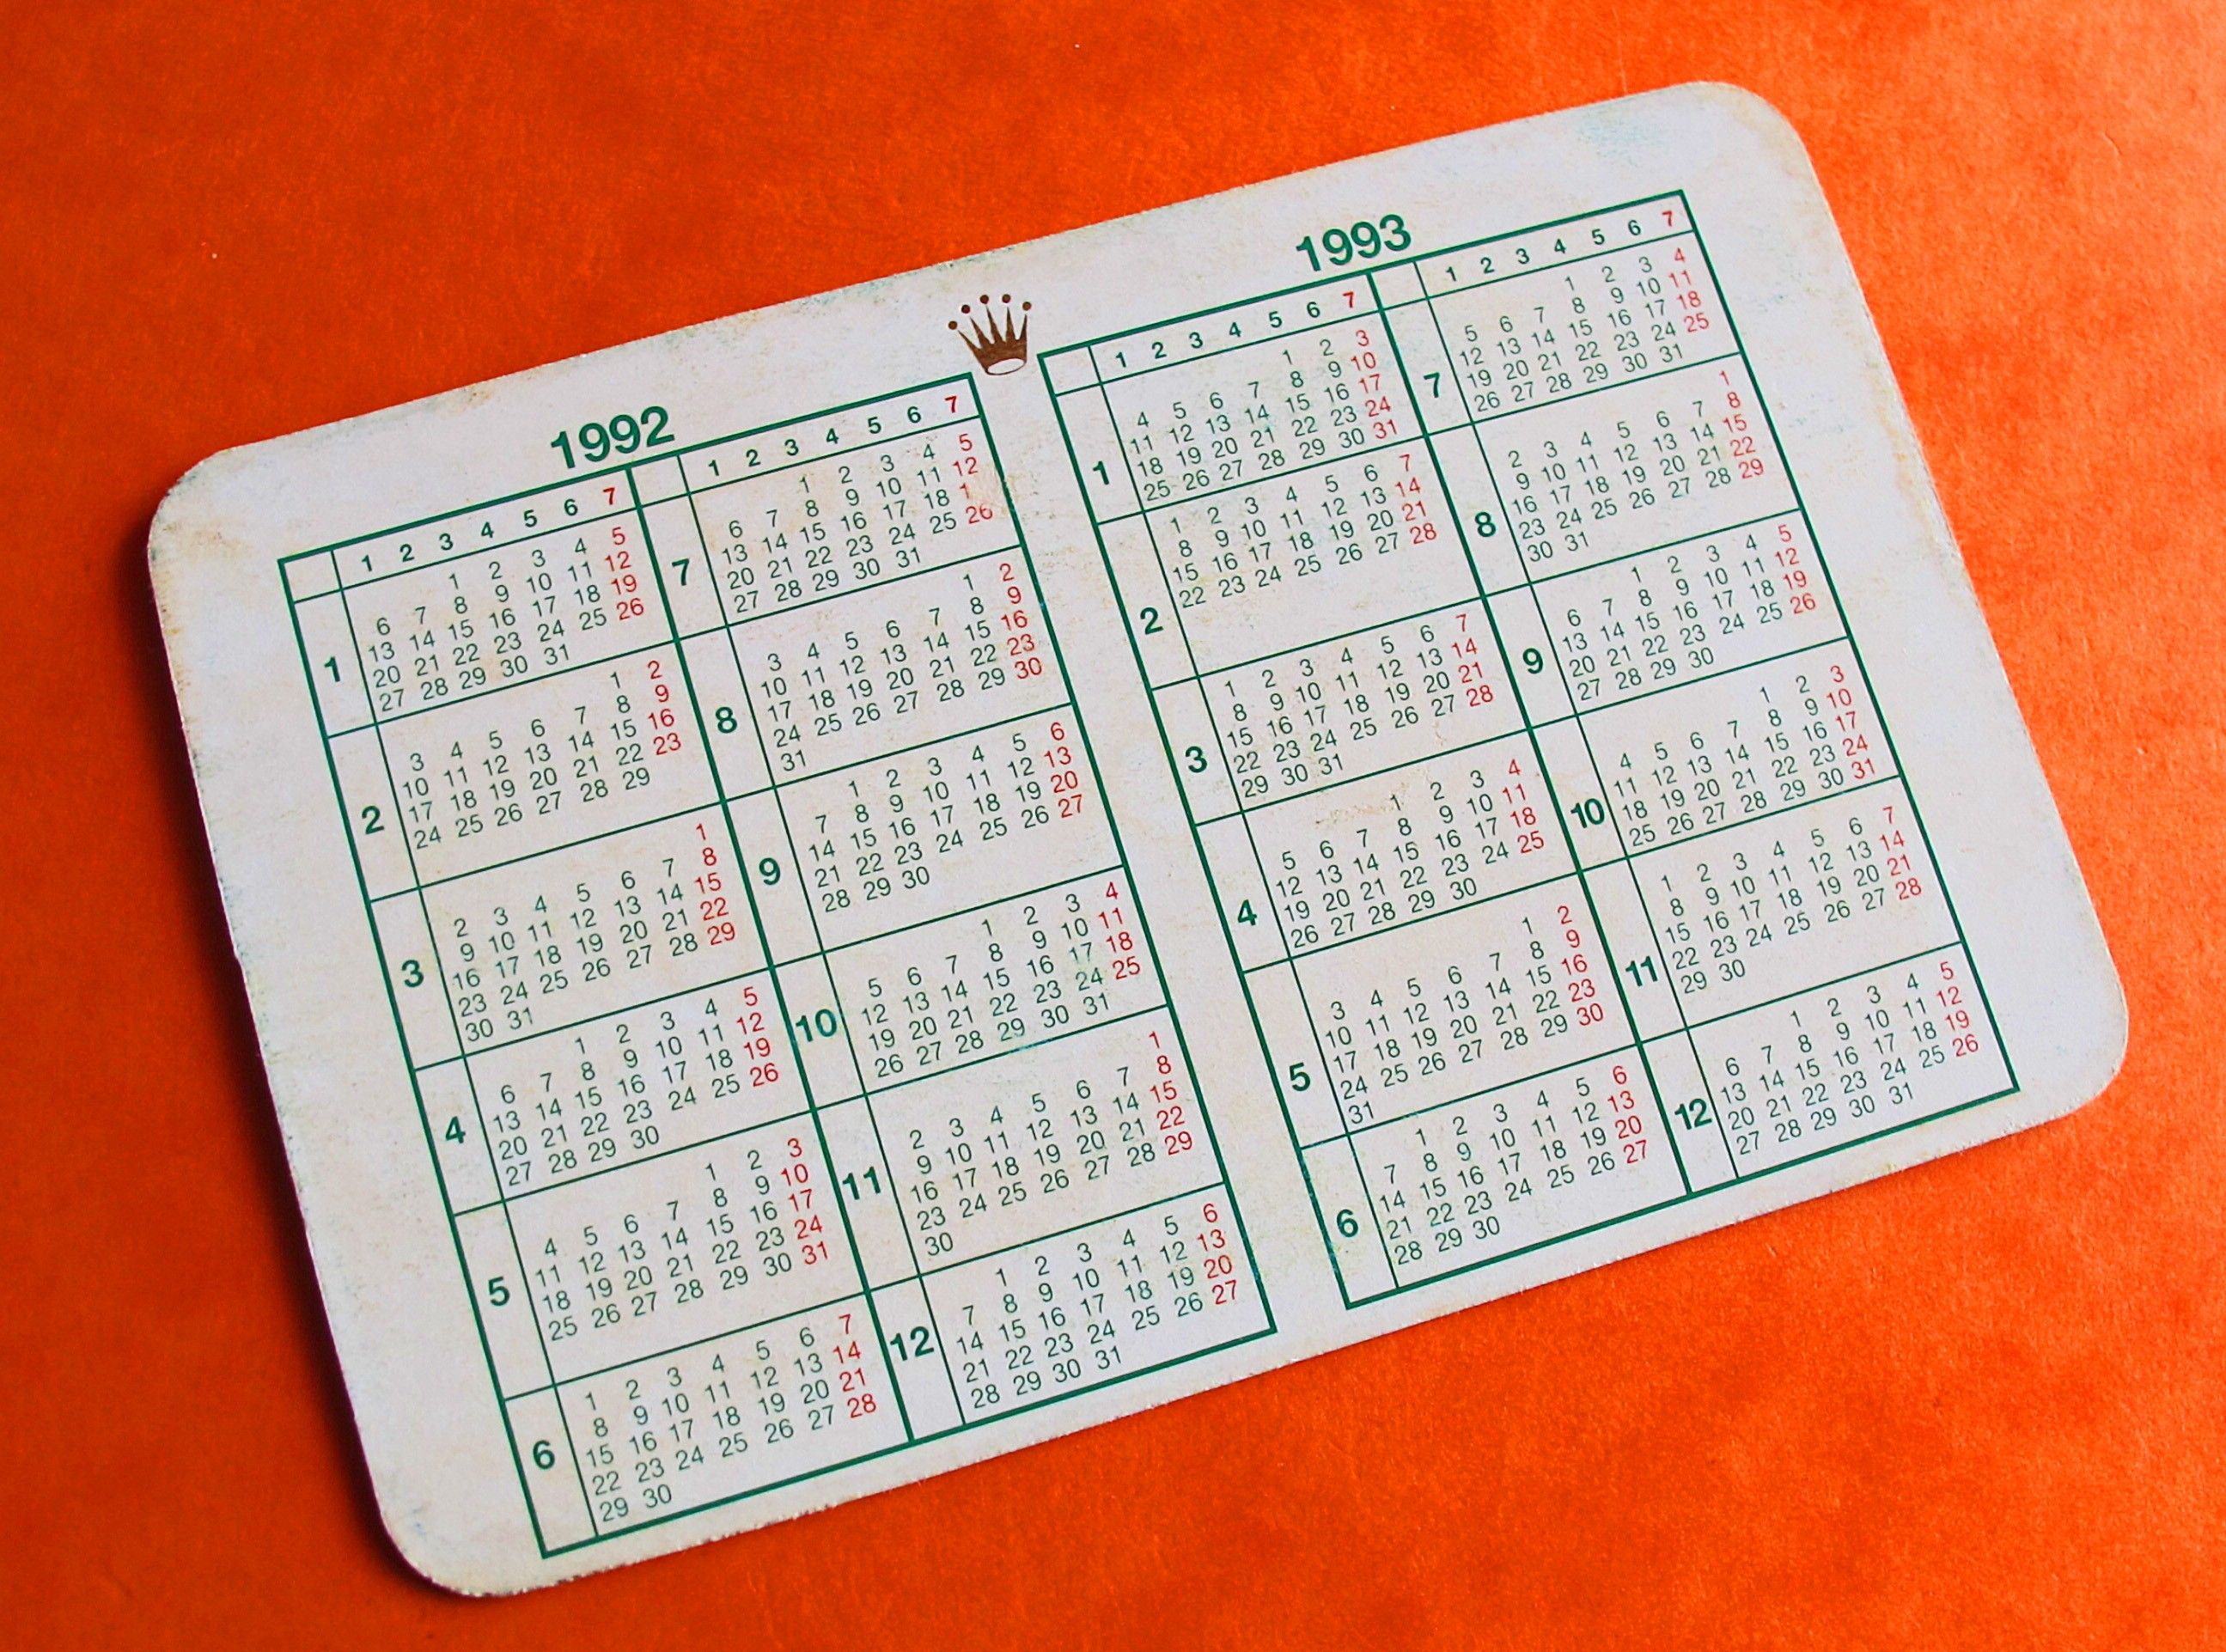 rolex calendar card